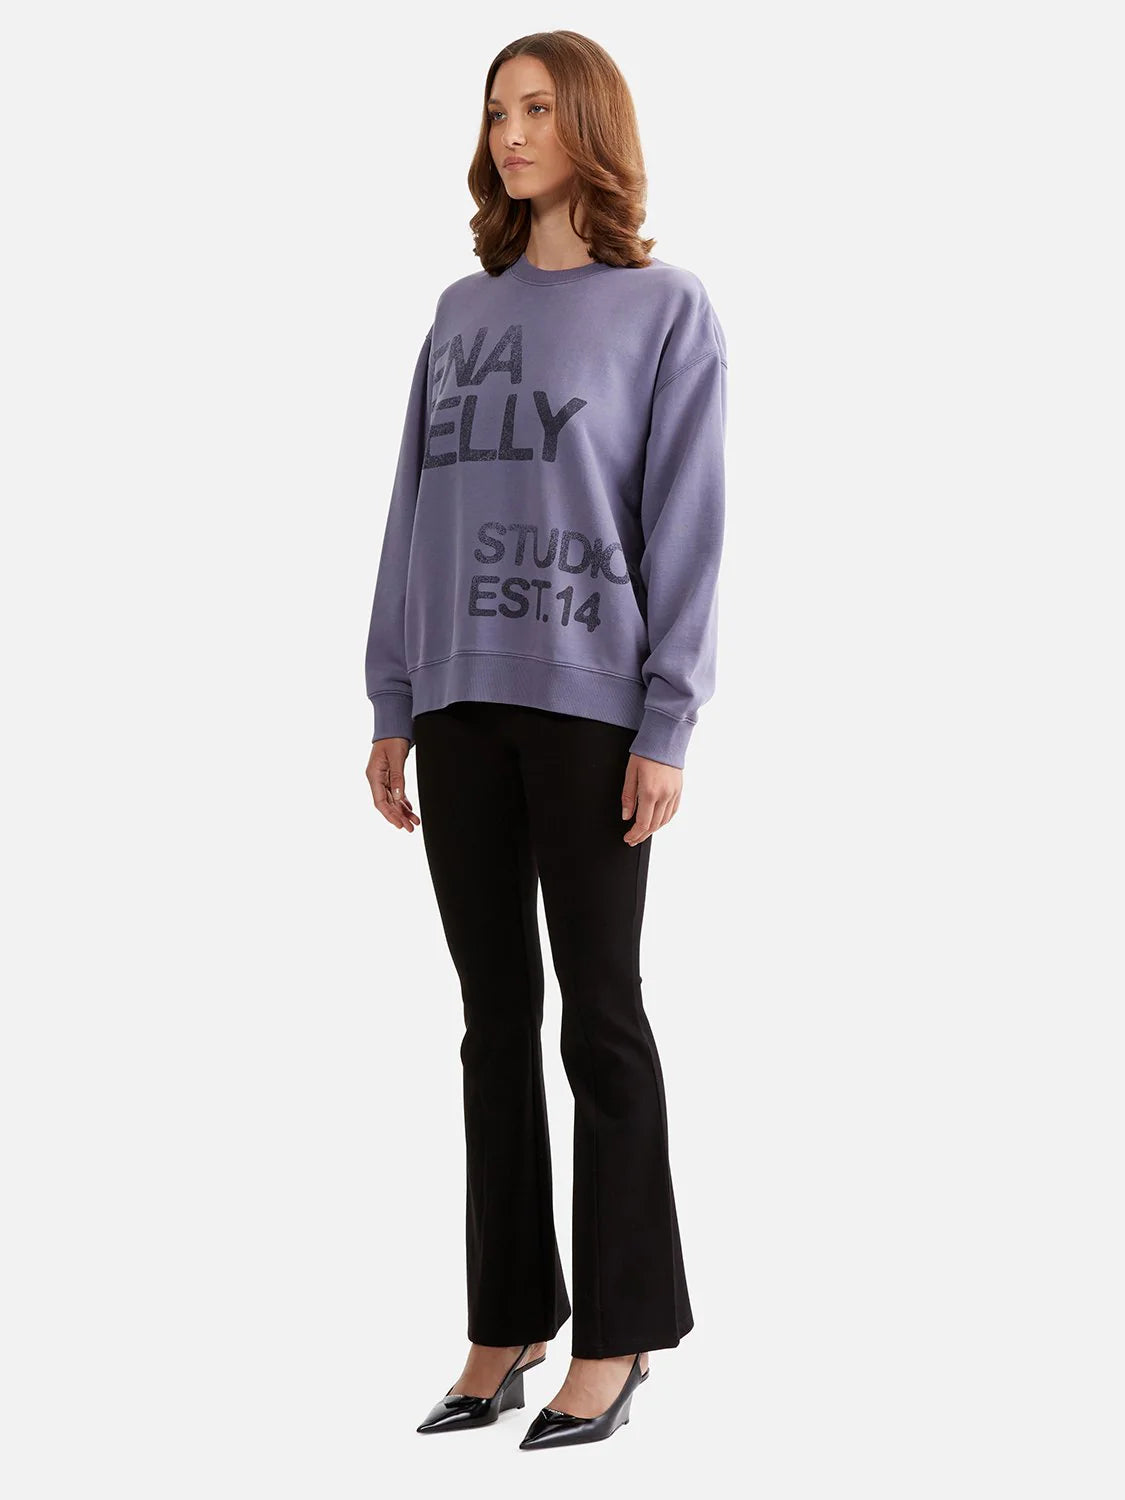 ENA Pelly II LOLA Oversized Sweater Stamped logo - Dark Iris